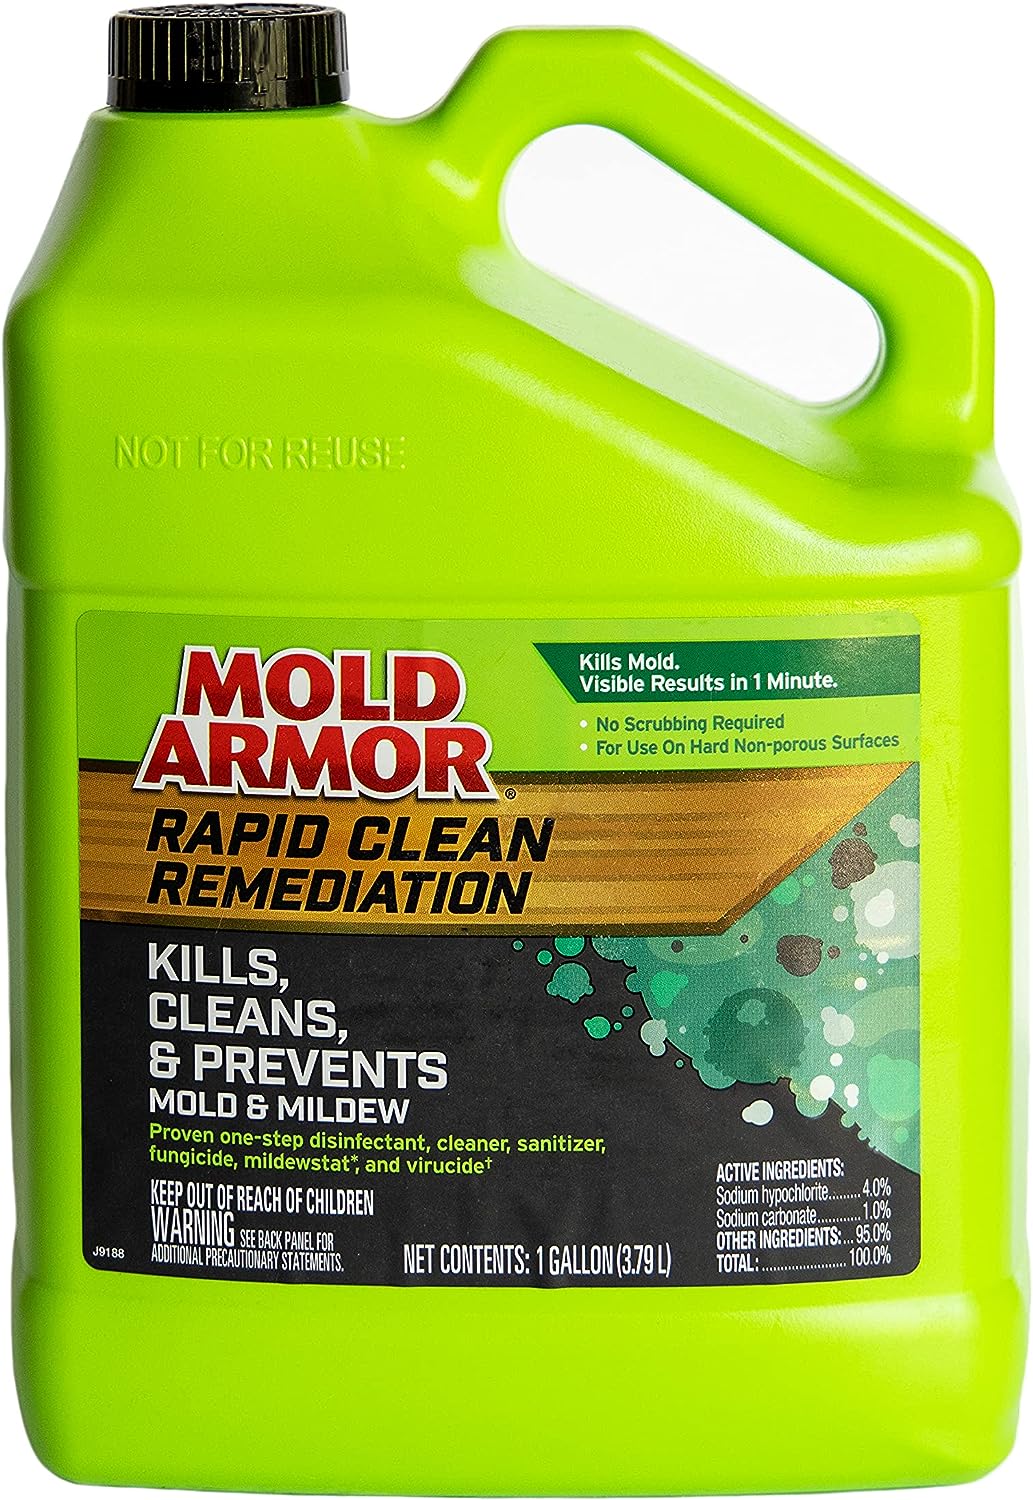 MOLD ARMOR Rapid Clean Remediation, 1 Gallon